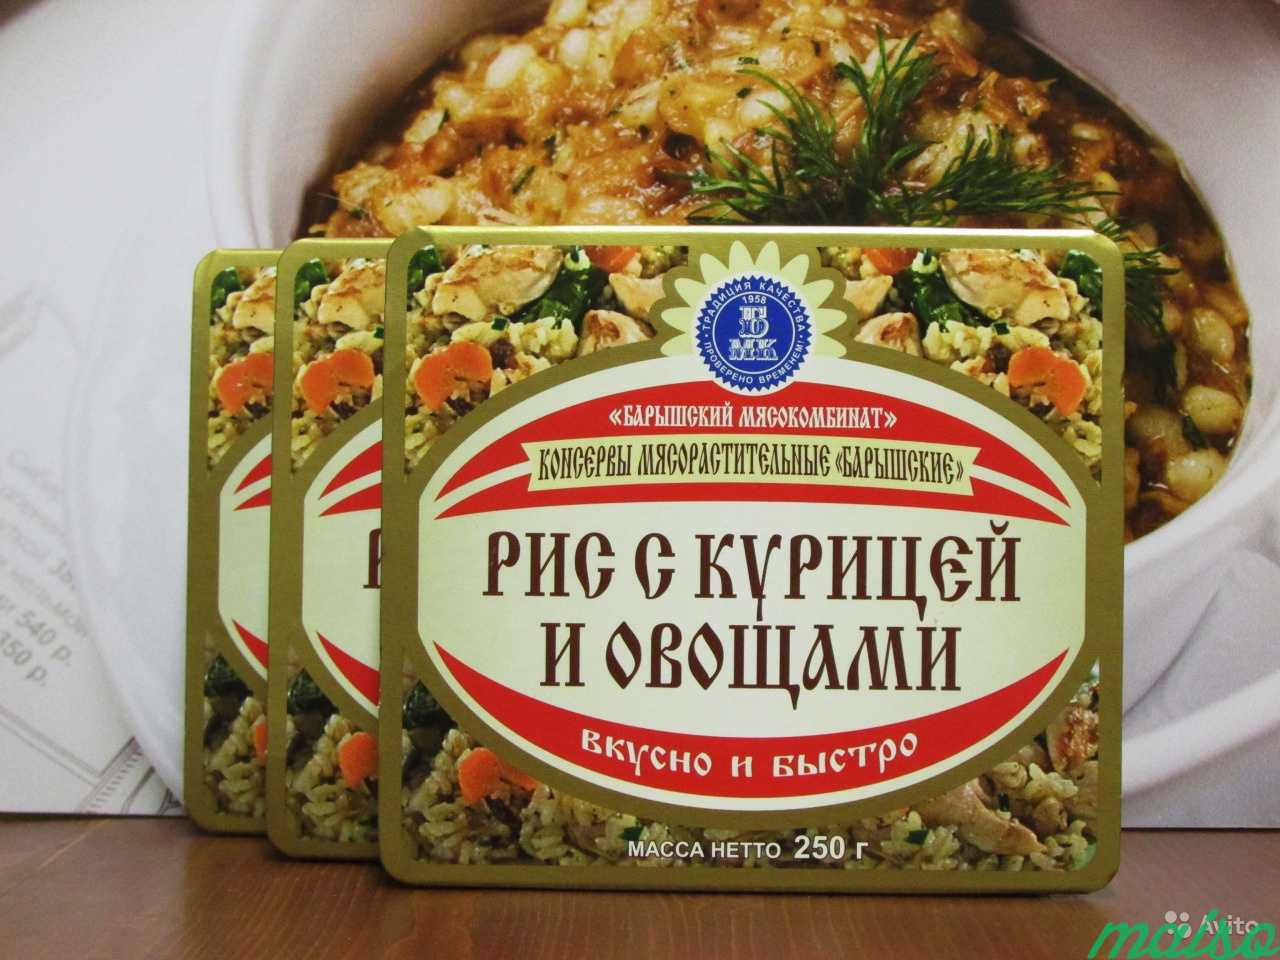 Рис с курицей и овощами в Москве. Фото 1